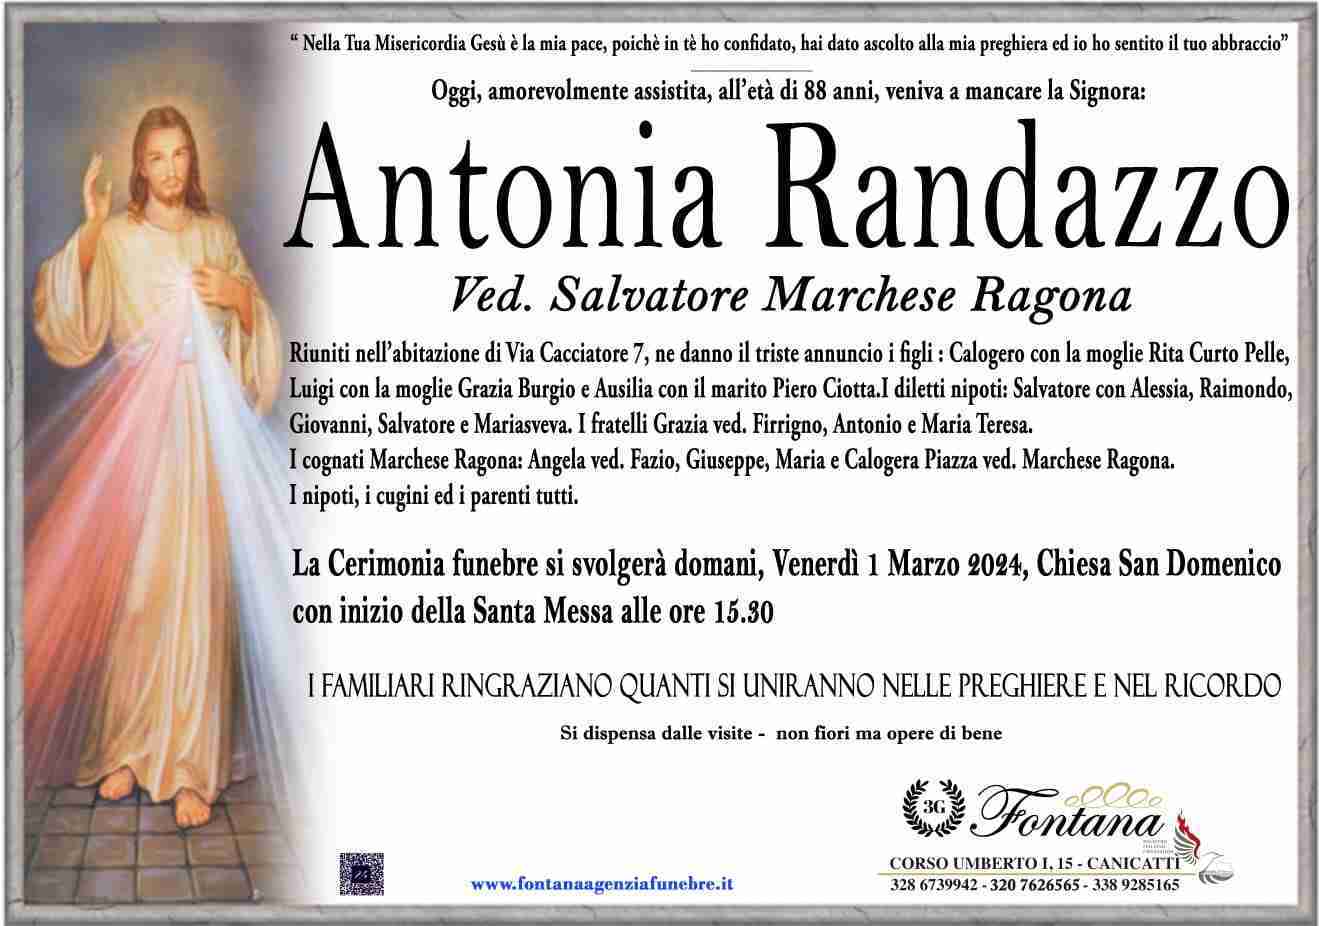 Antonia Randazzo